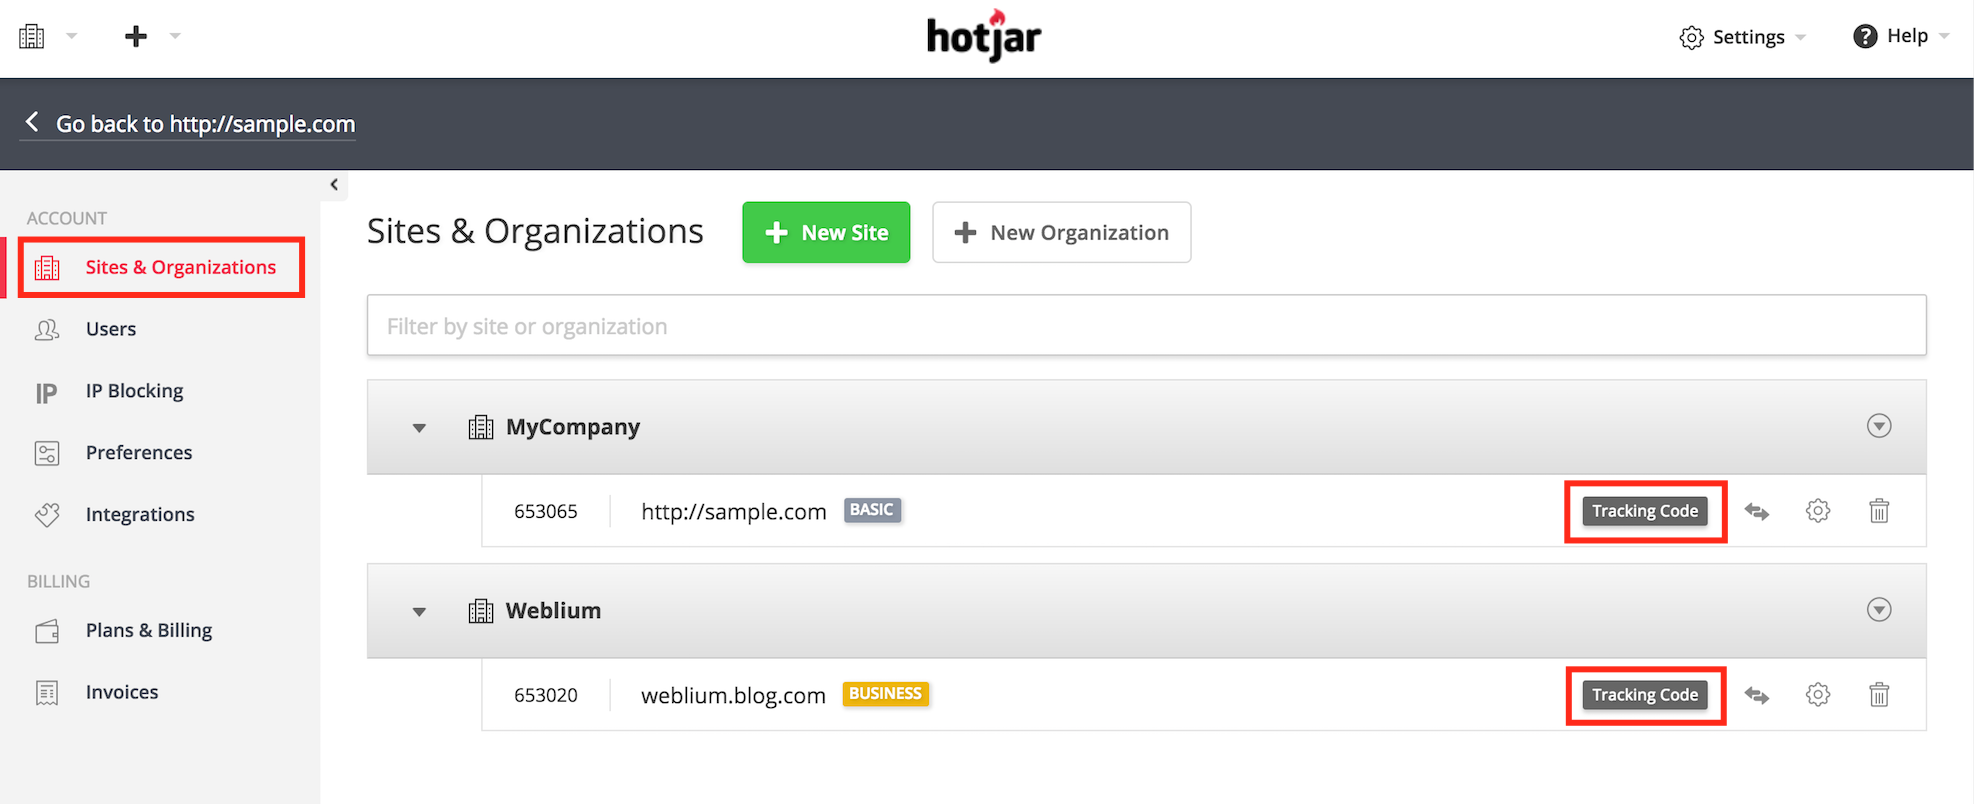 Sites and organizations on Hotjar